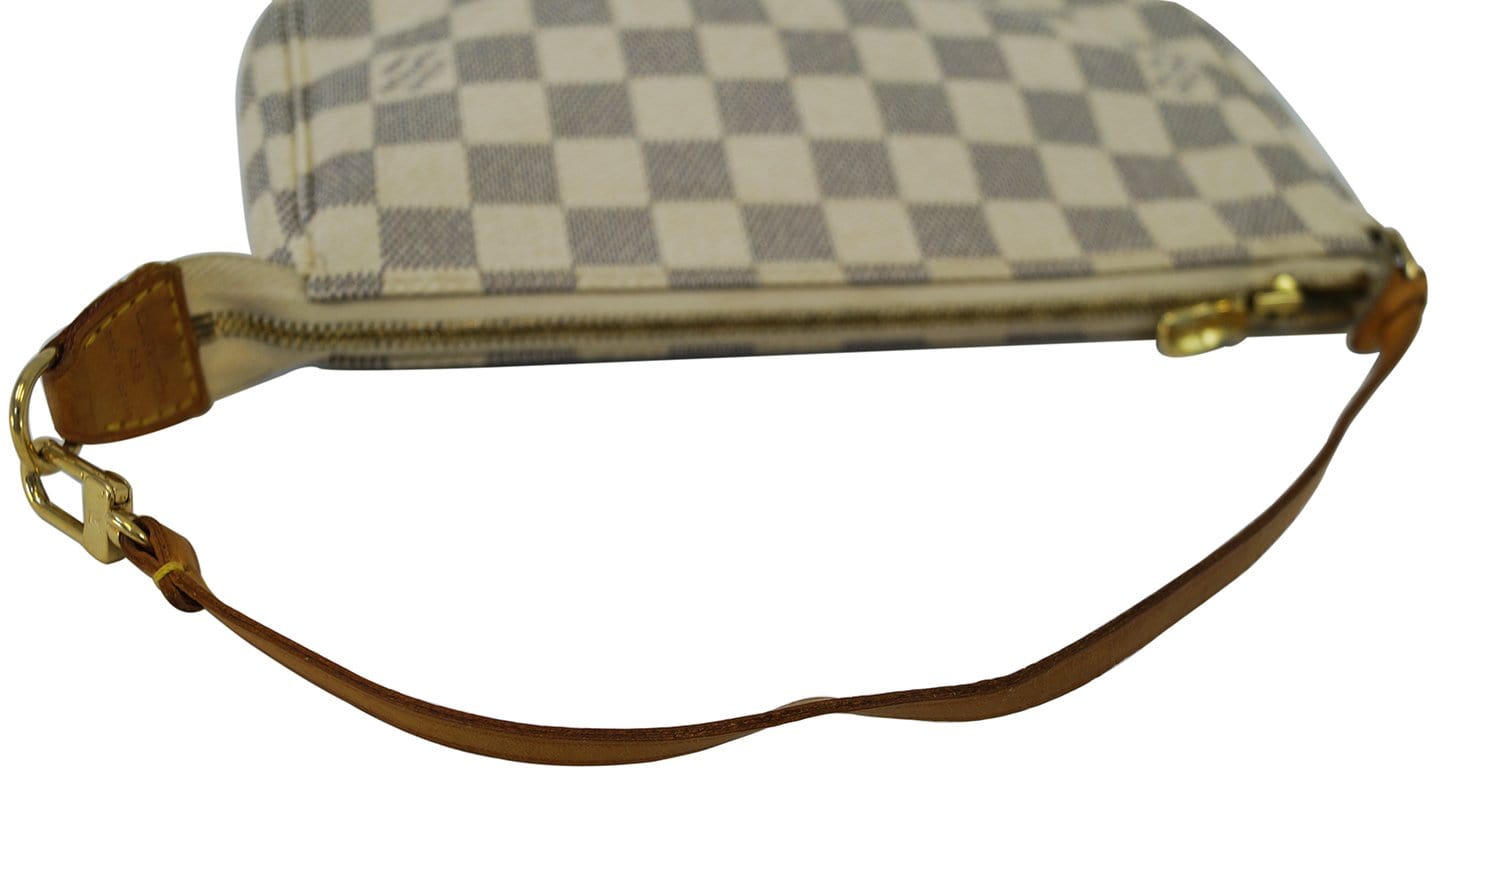 Pochette Accessoires Damier Azur Canvas in Beige - Handbags N41207, LOUIS  VUITTON ®